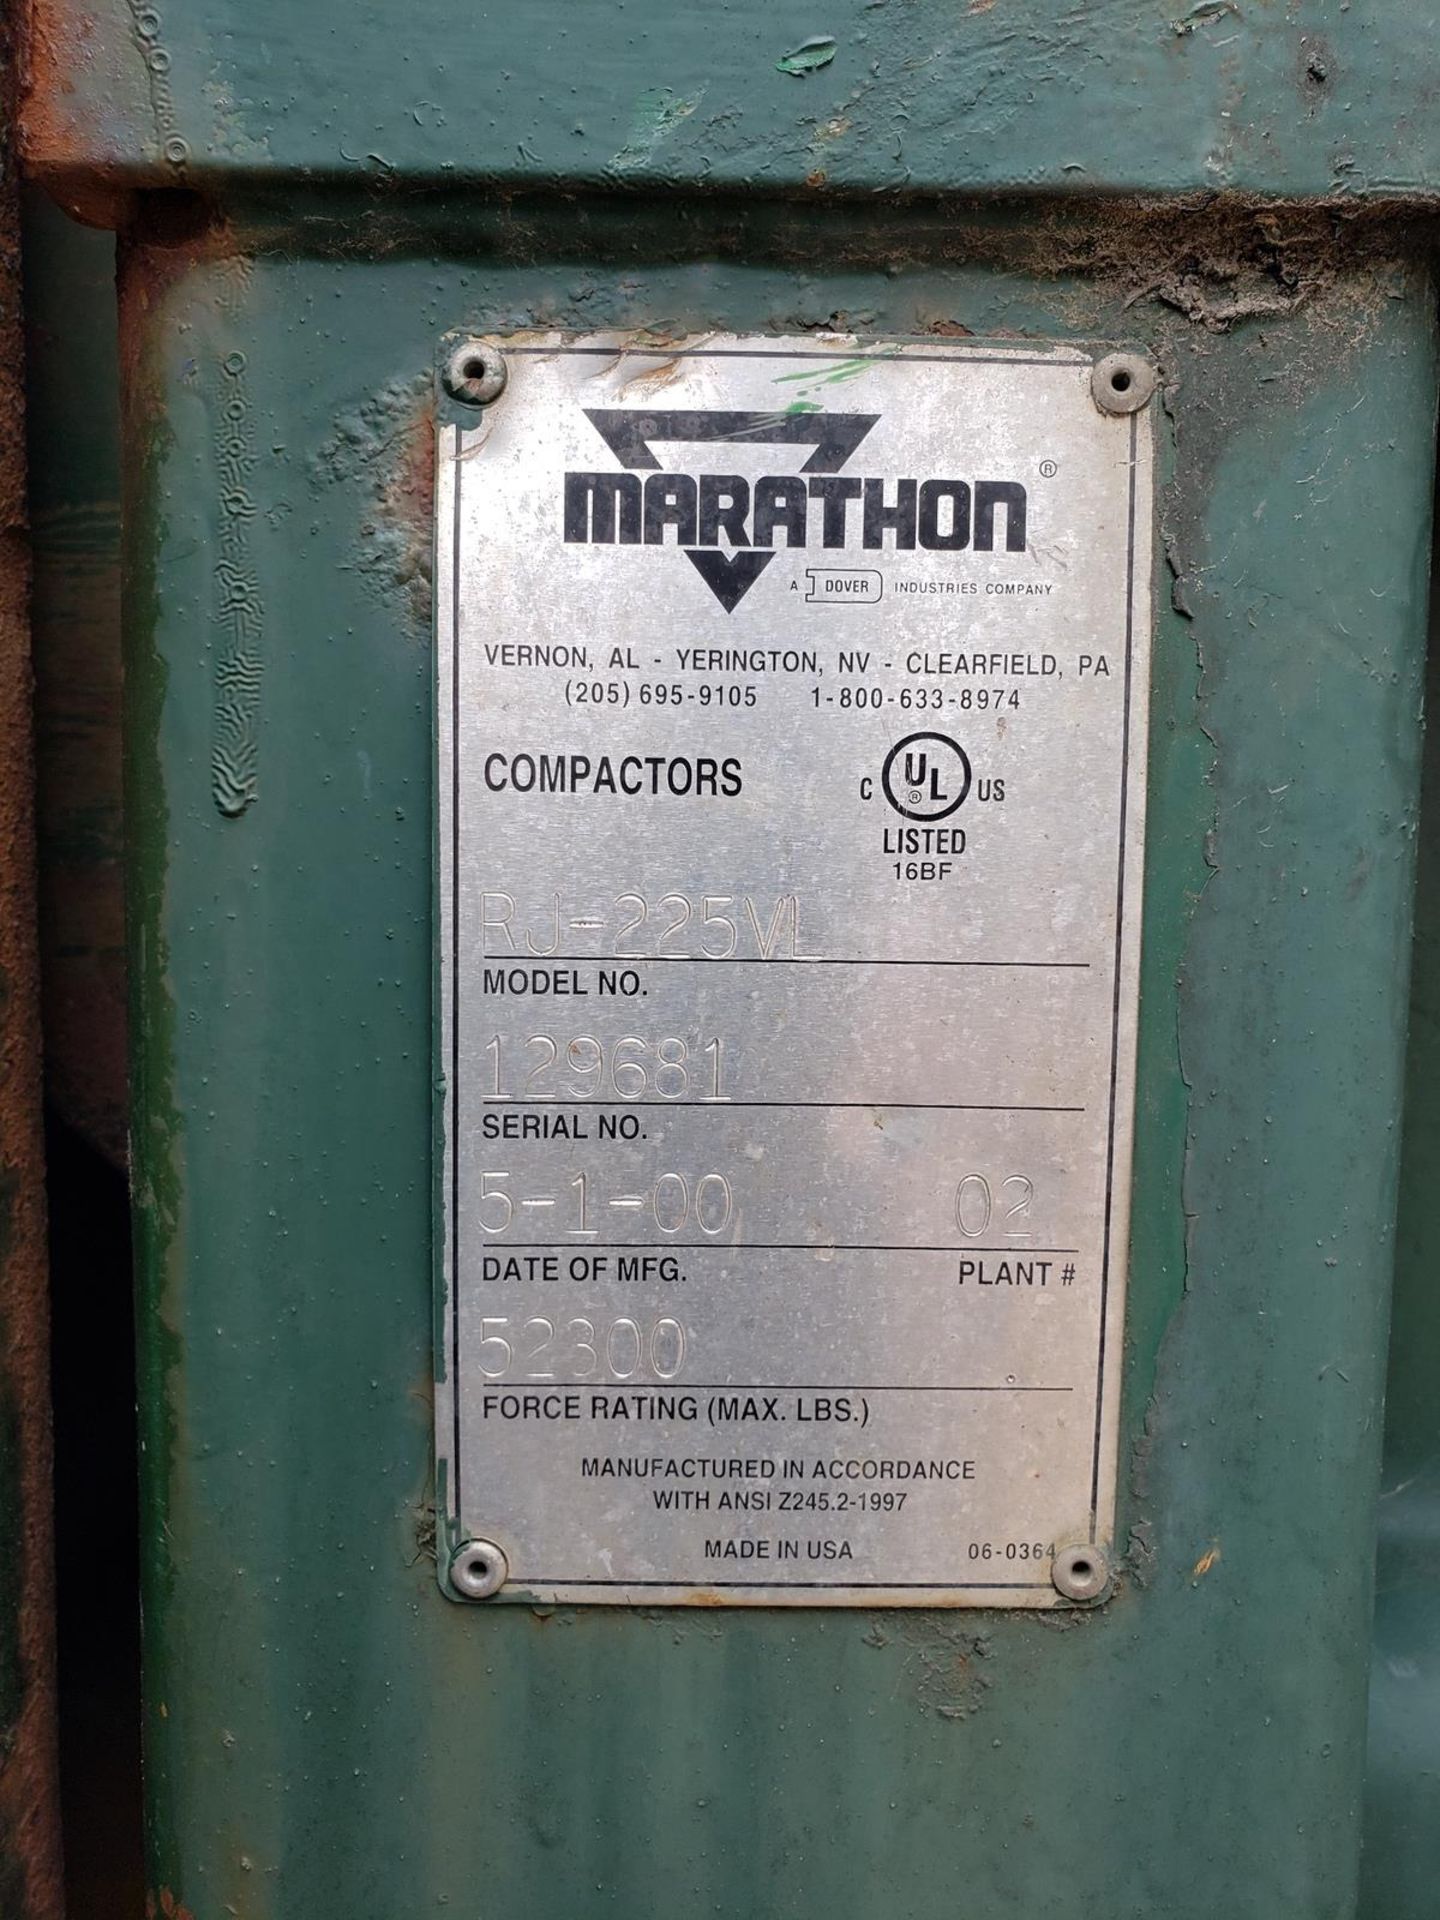 Marathon Waste Compactor, M# Ram Jet RJ-225-VL, S/N 129681, Onboard Hydraulics, | Rig Fee: $1800 - Image 2 of 3